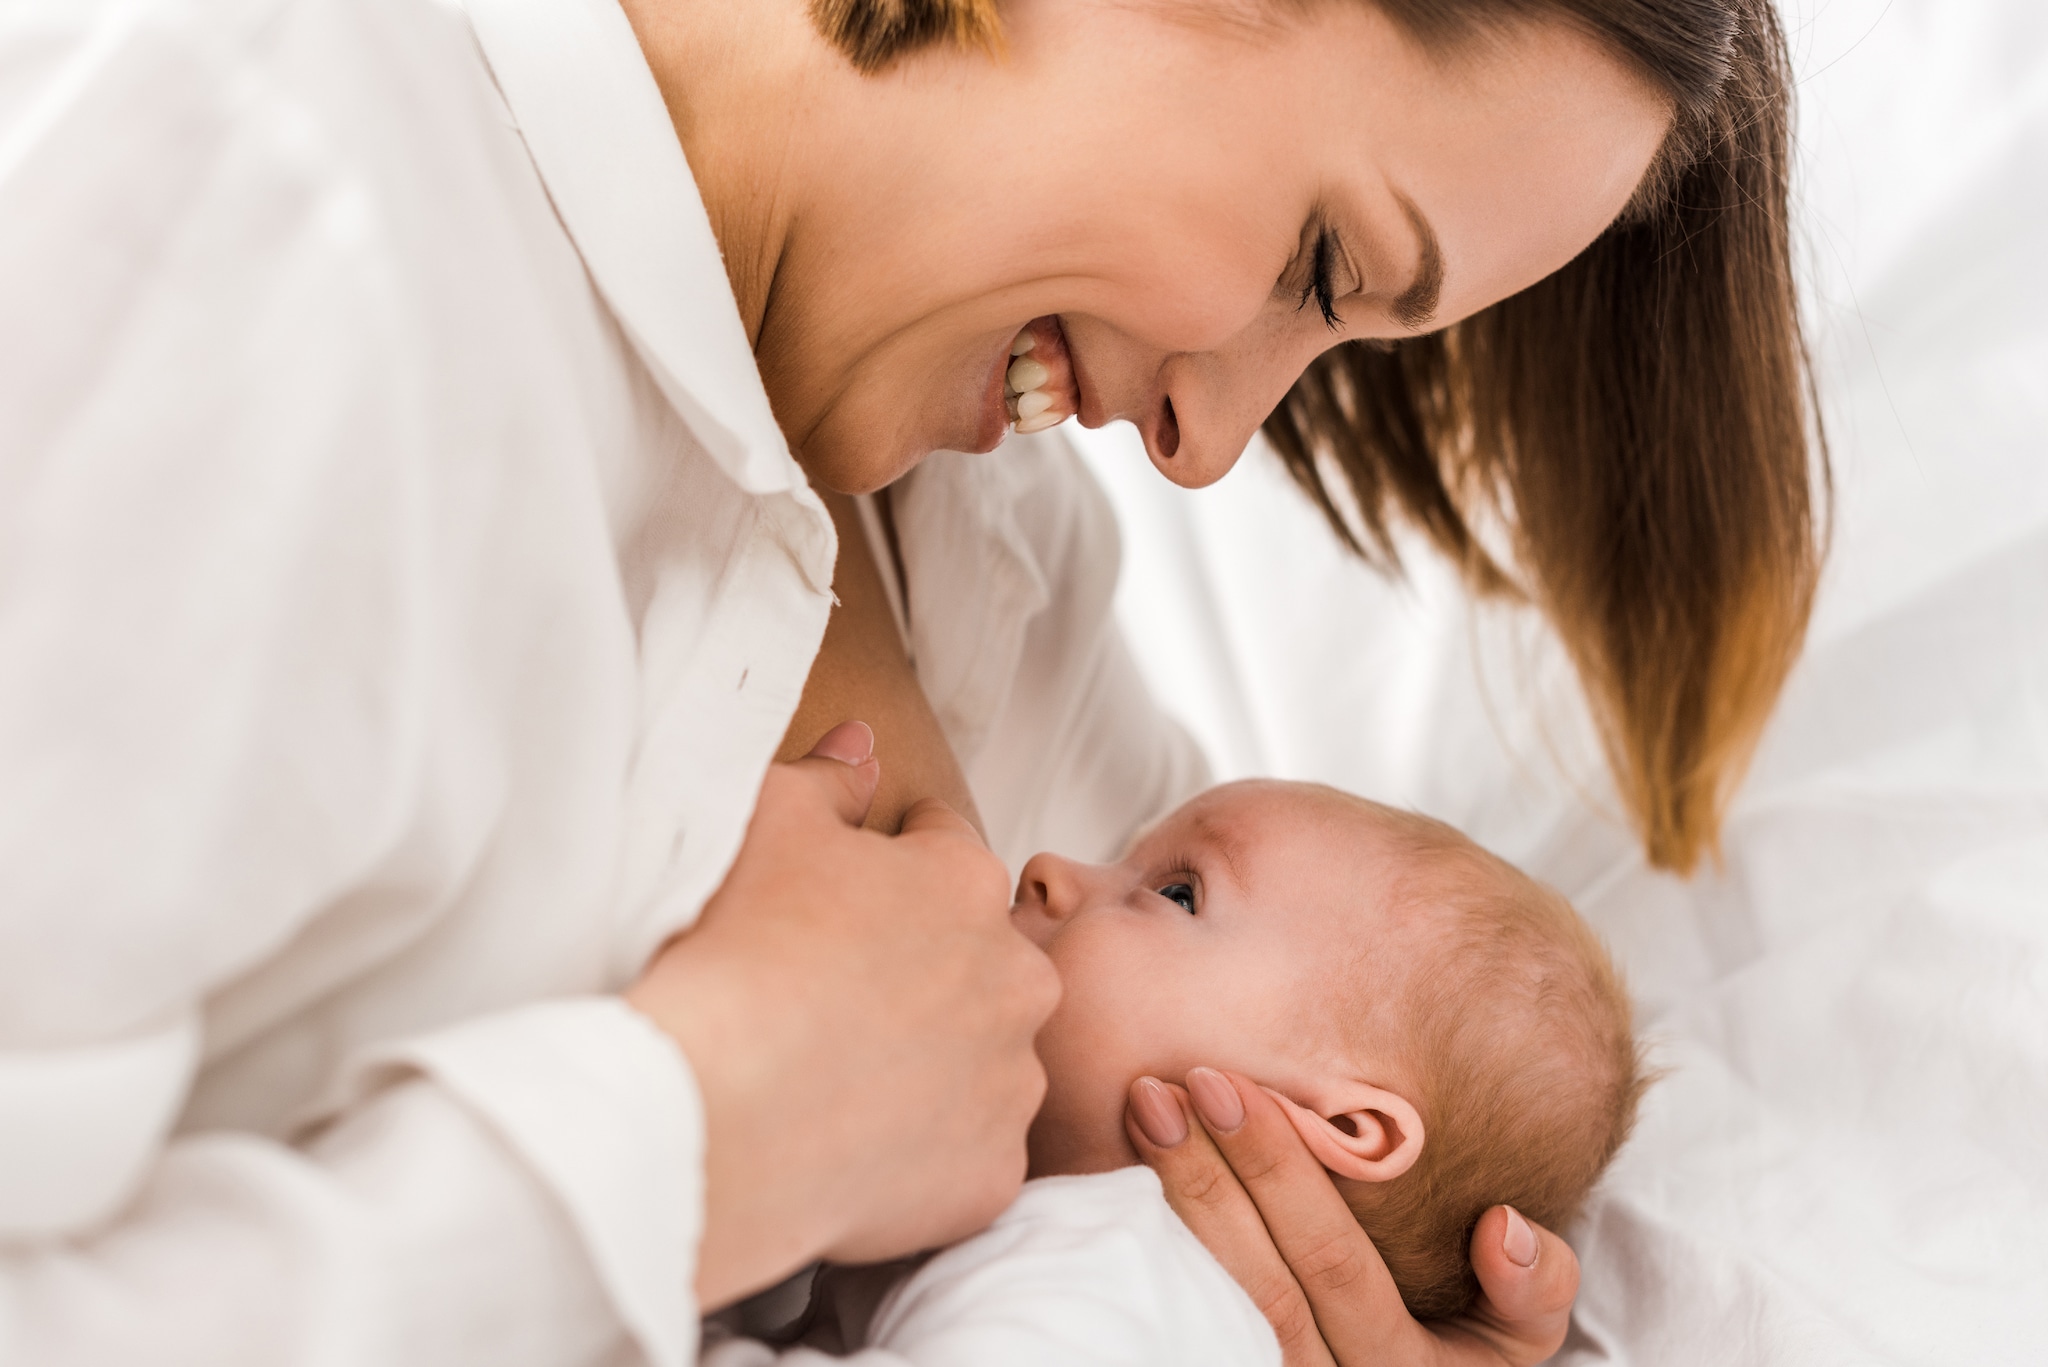 https://www.cdc.gov/breastfeeding/images/social-media/smiling-young-mother-breastfeeding-baby.jpg?_=44426